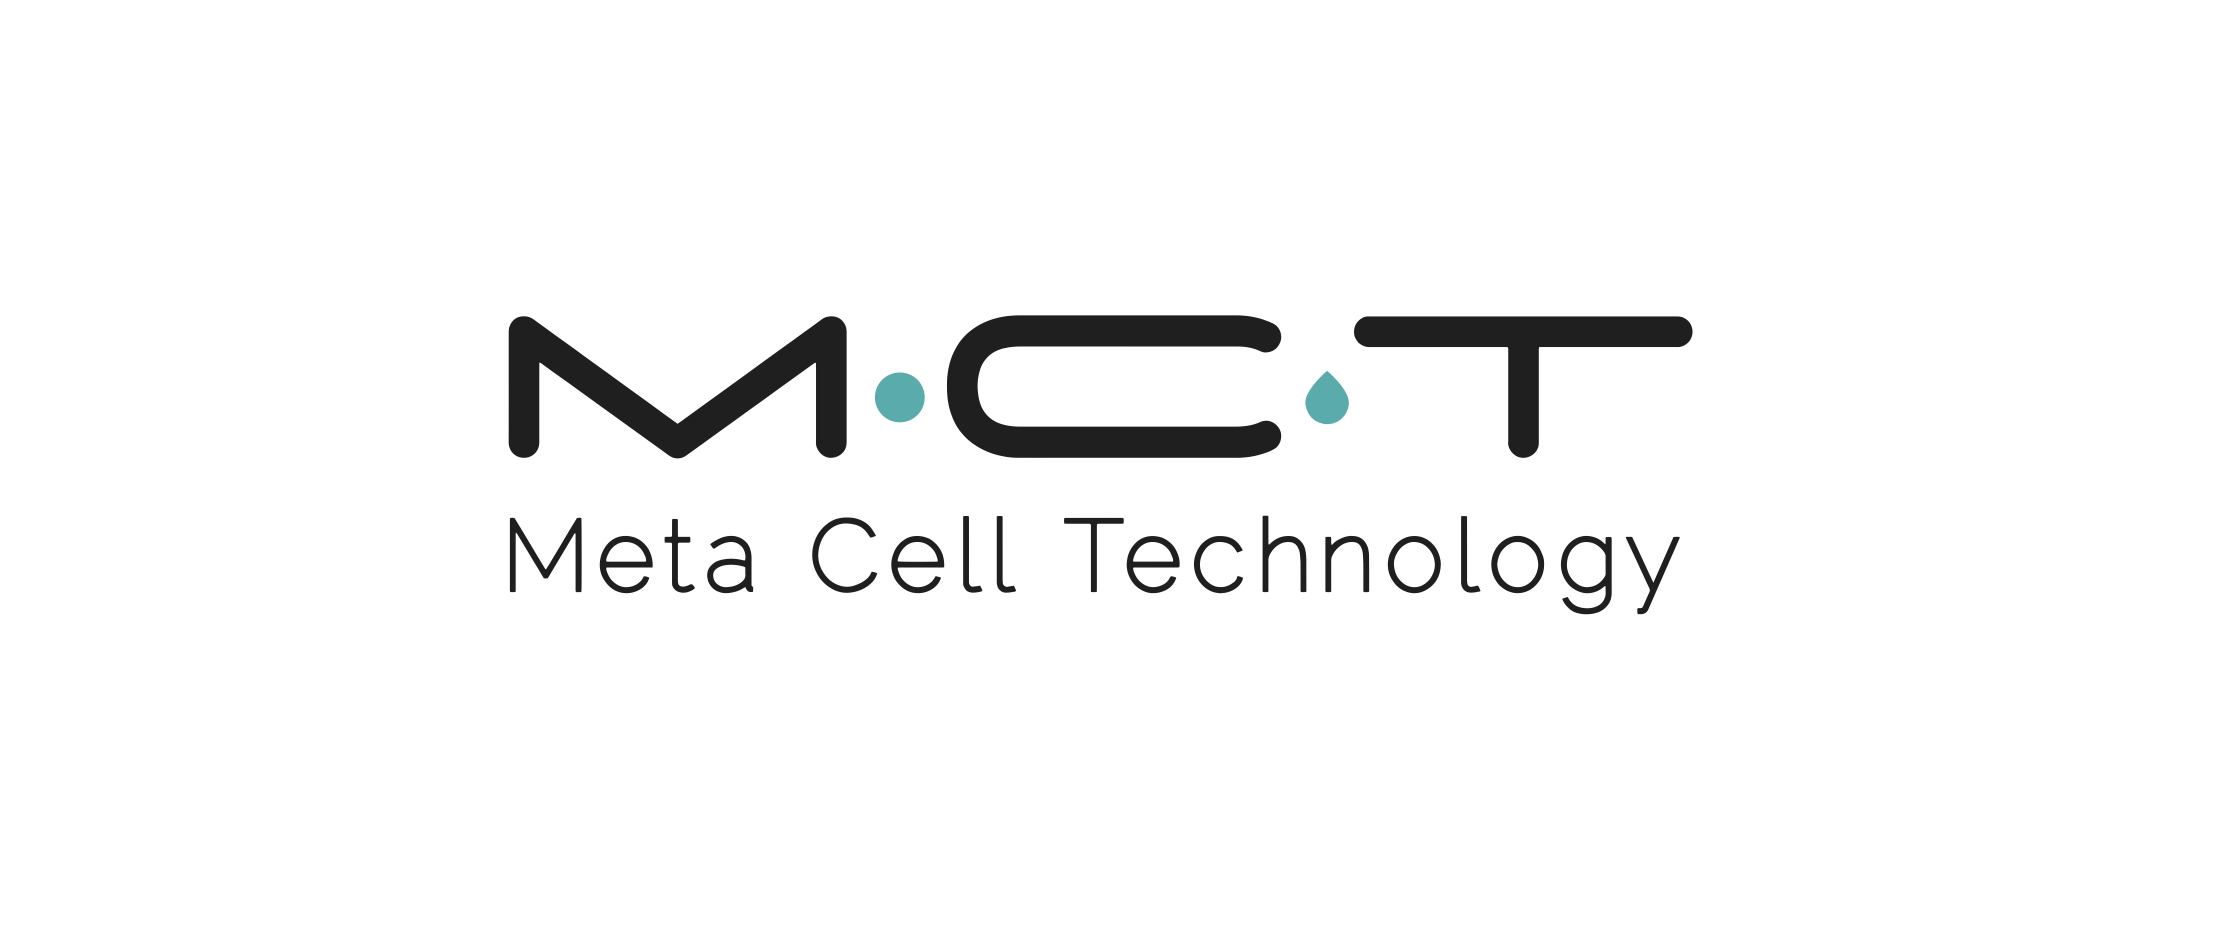 Logotipo-MTC-Meta-Cell-Tecnology